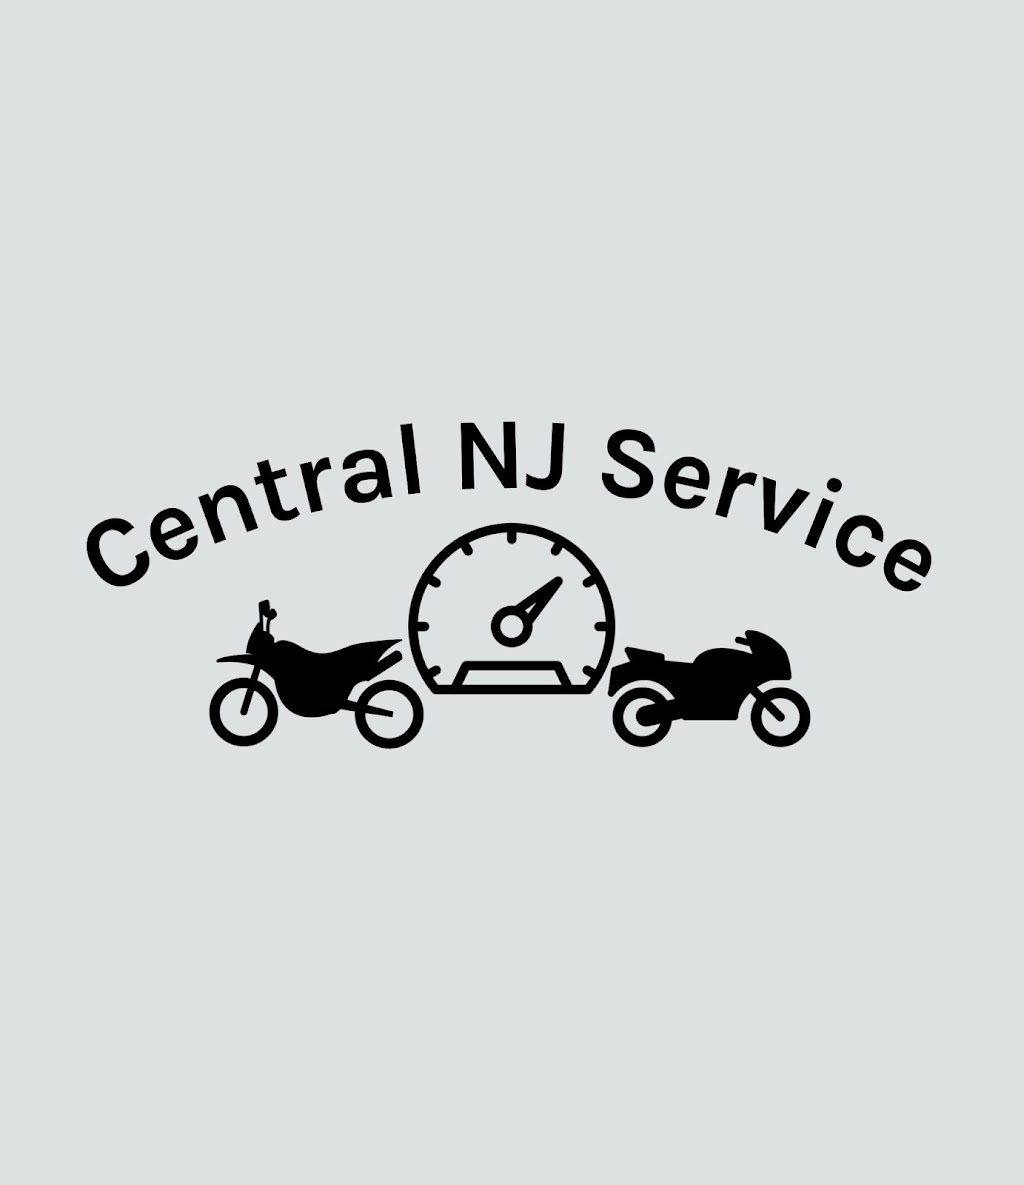 Mobile Motorcycle & Power Sports Service Central NJ | Harrison St, Princeton, NJ 08540 | Phone: (732) 991-2731